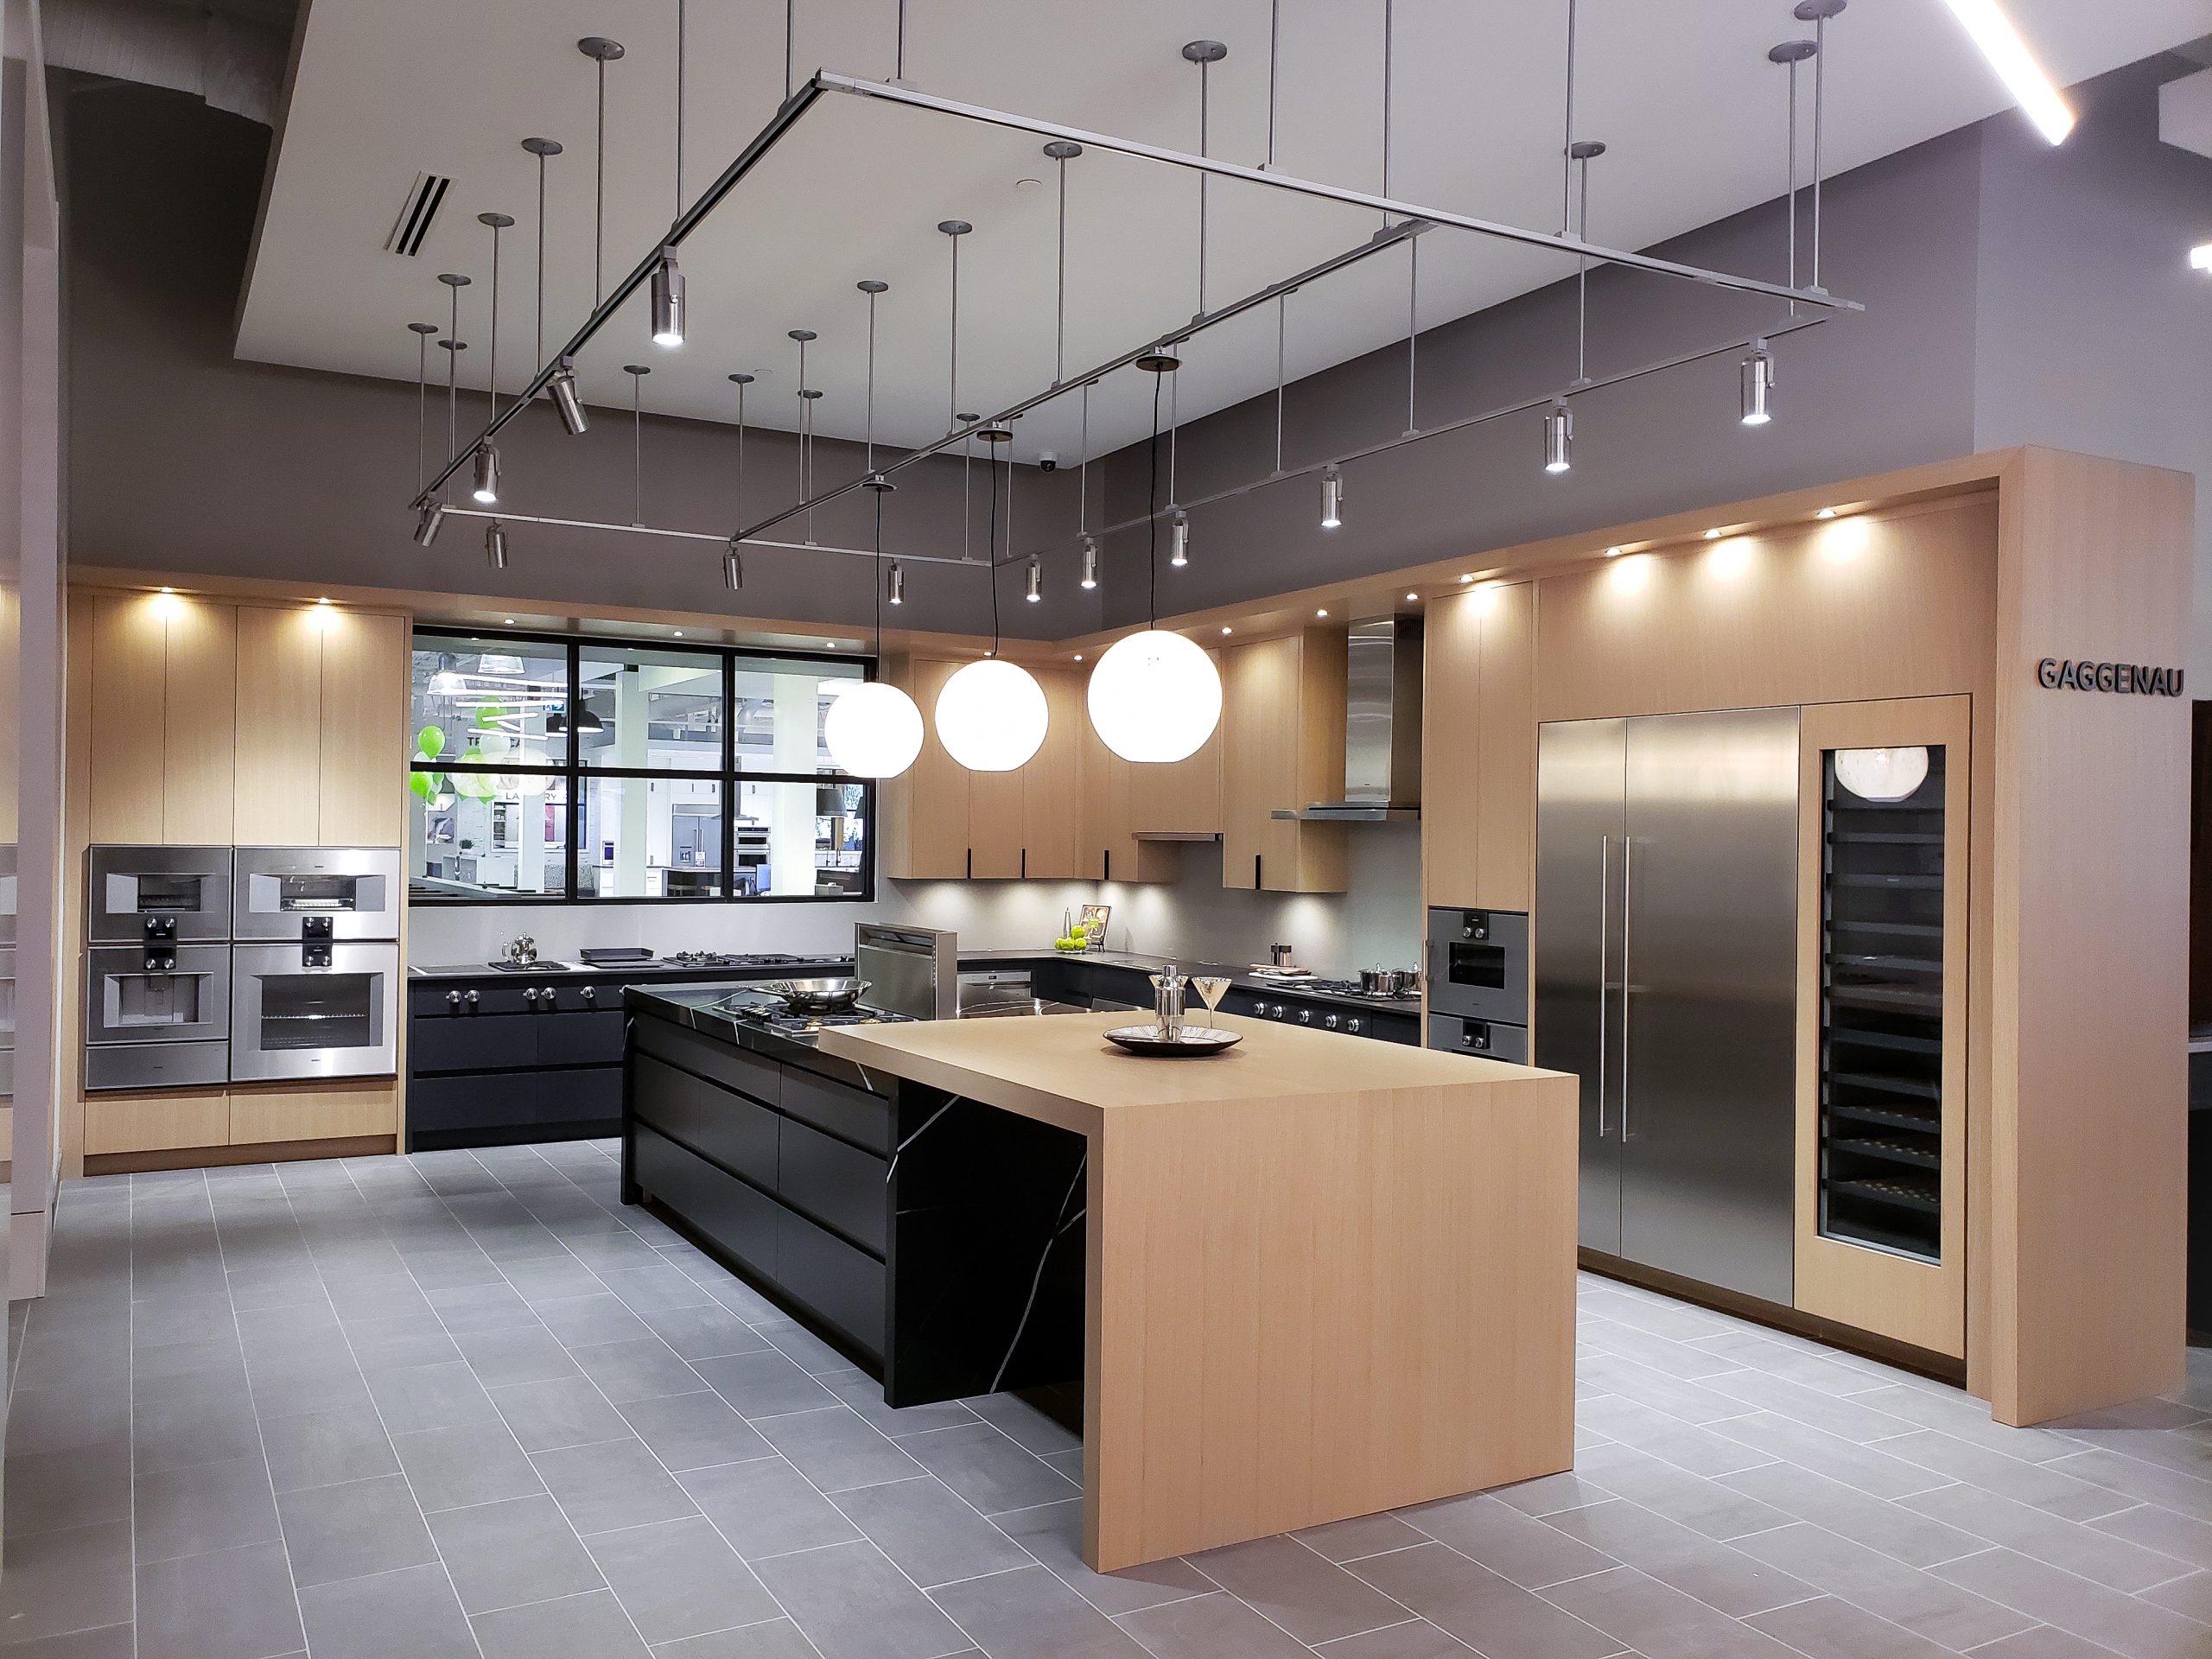 roundel the art of kitchen design